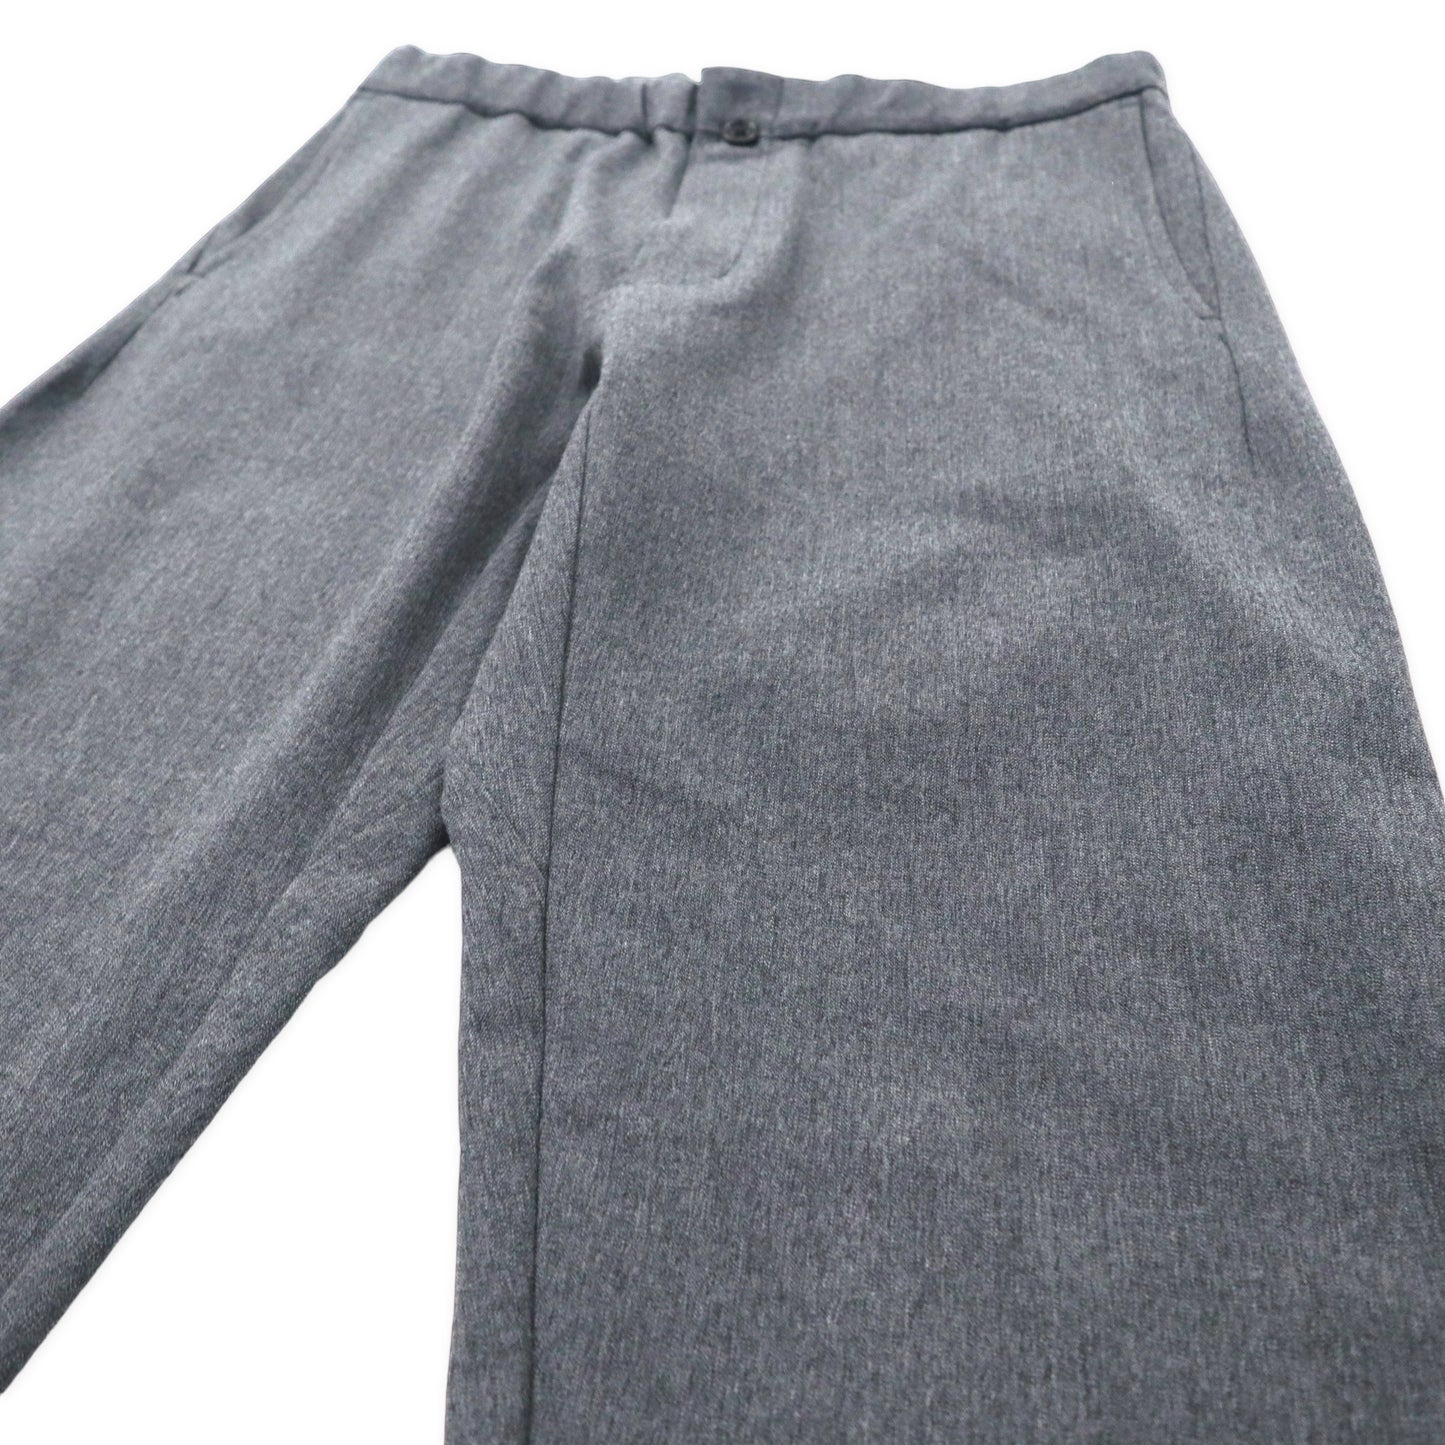 YAECA Easy Slacks Pants S Gray Polyester Ergonomic 14610 2way Wide Pants